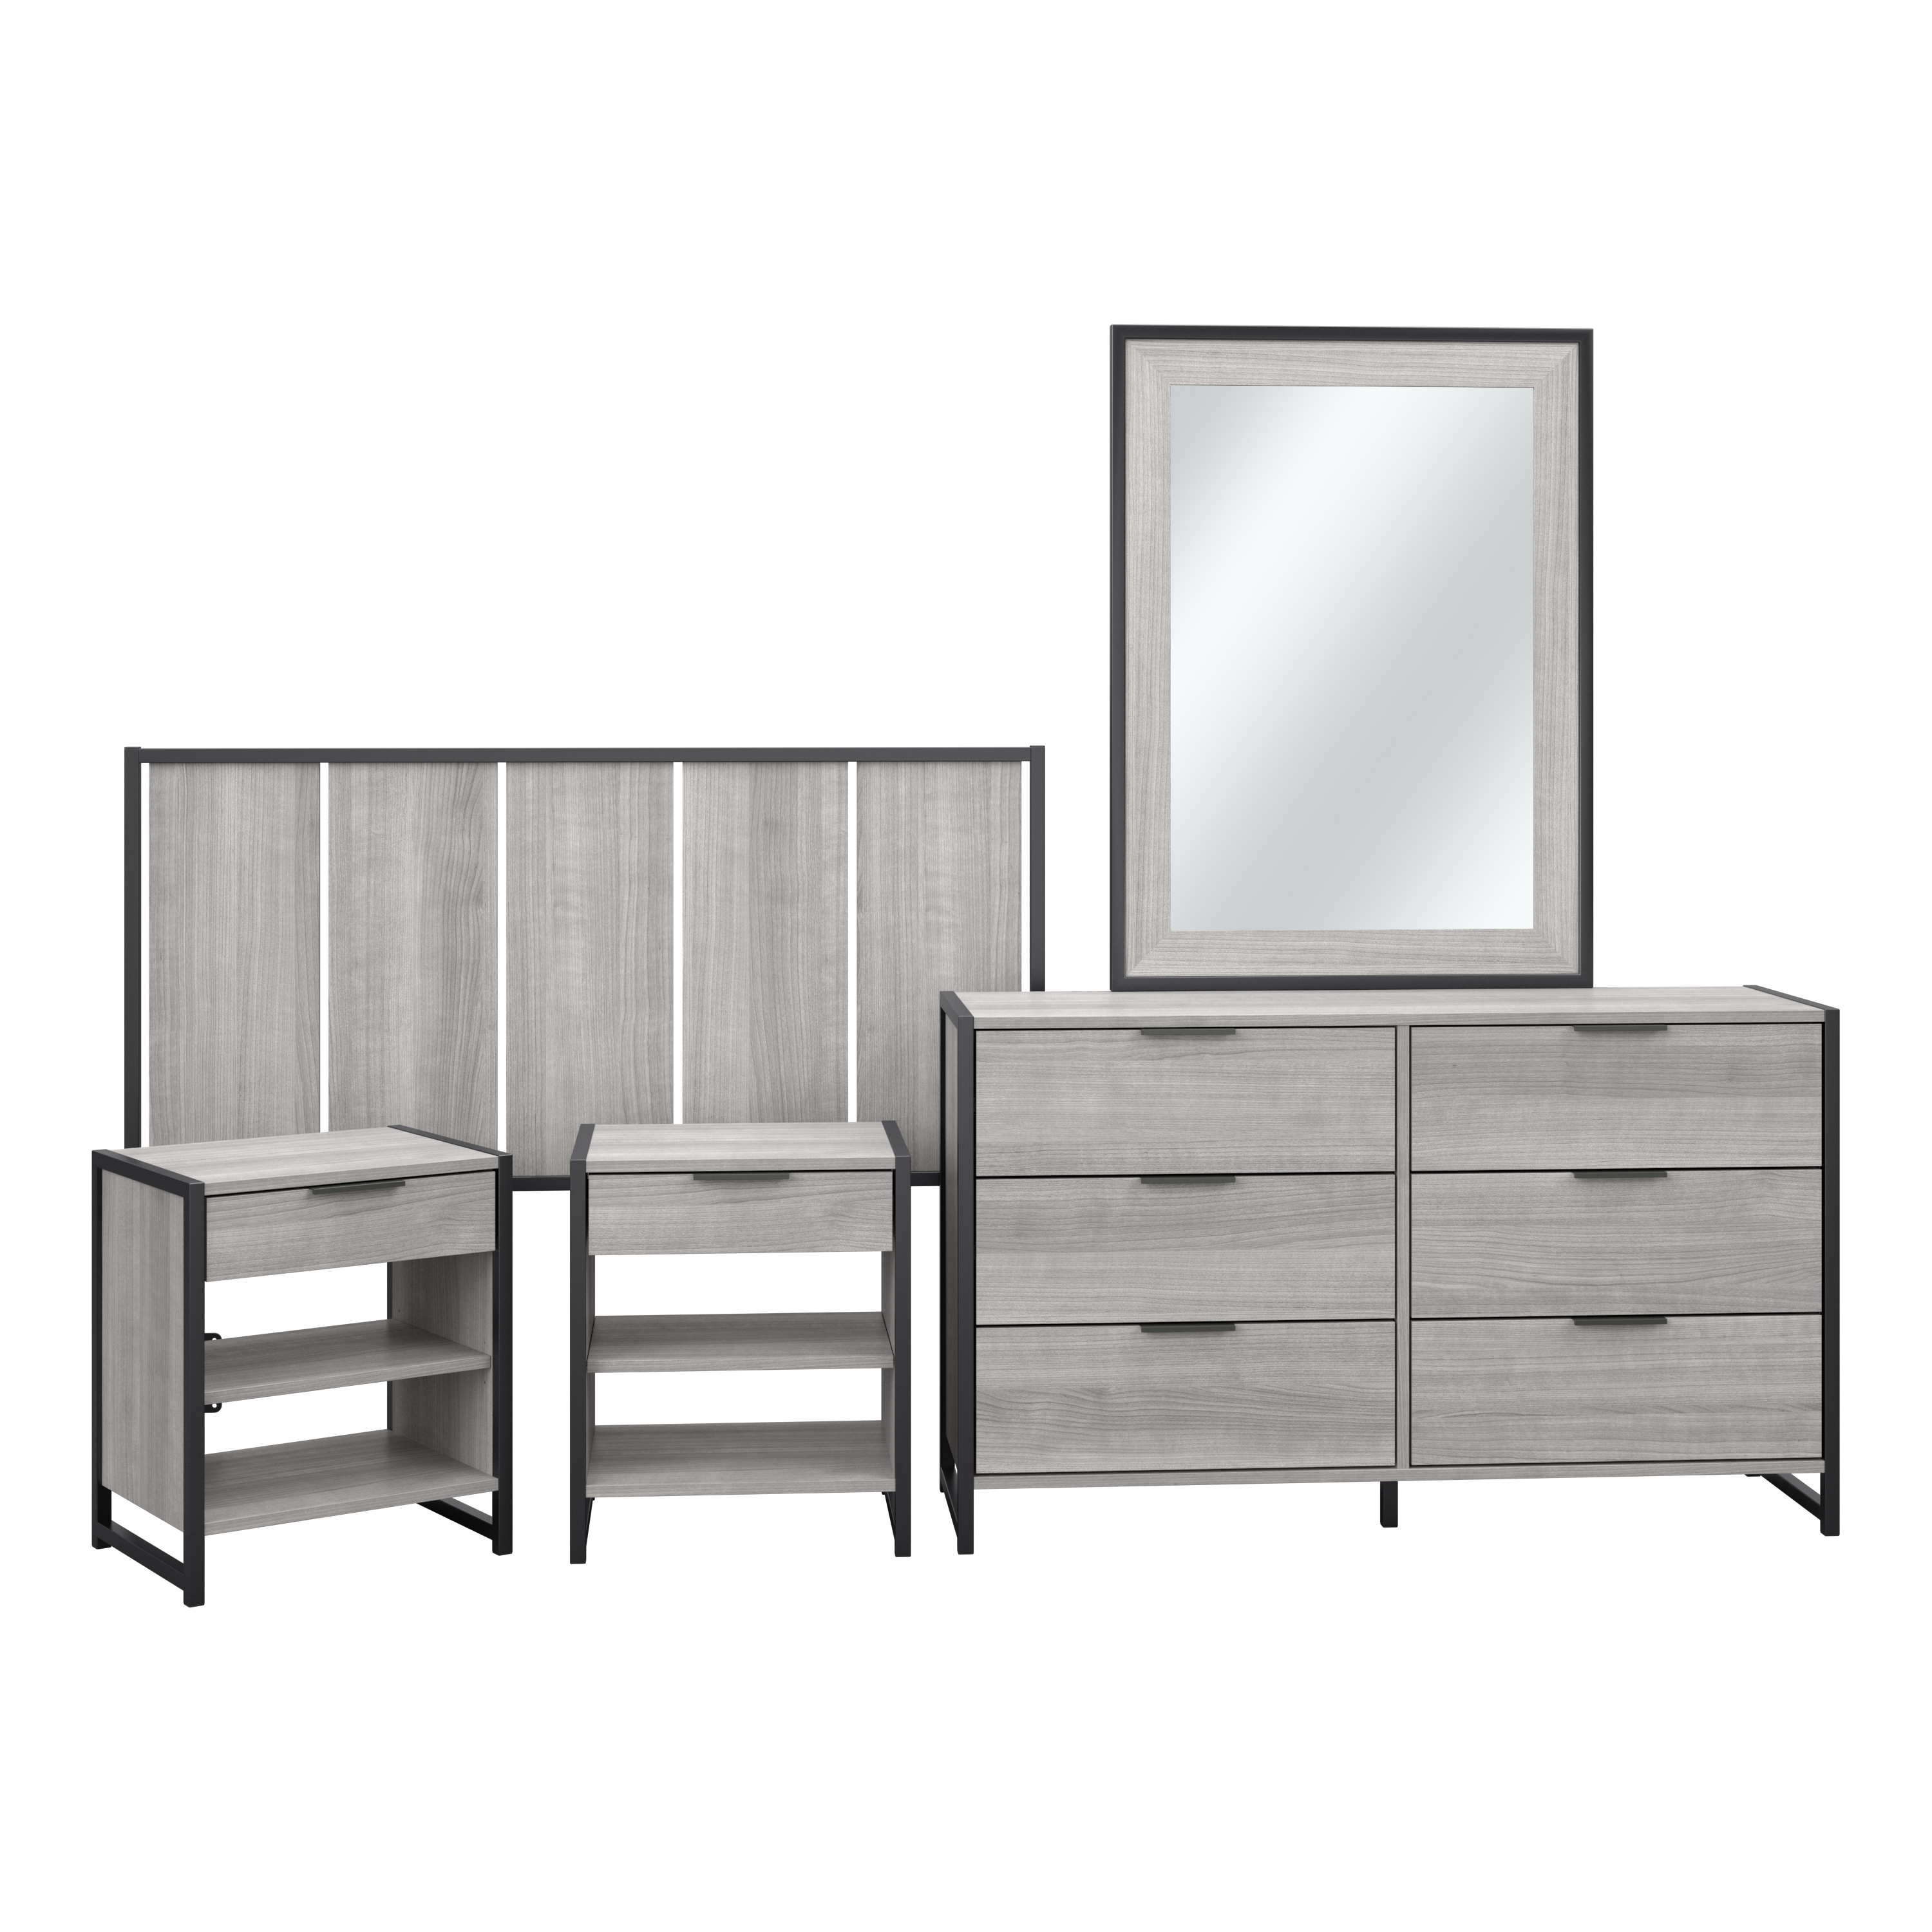 Shop Bush Furniture Atria 5 Piece Modern Bedroom Set with Full/Queen Size Headboard 02 ATR014PG #color_platinum gray